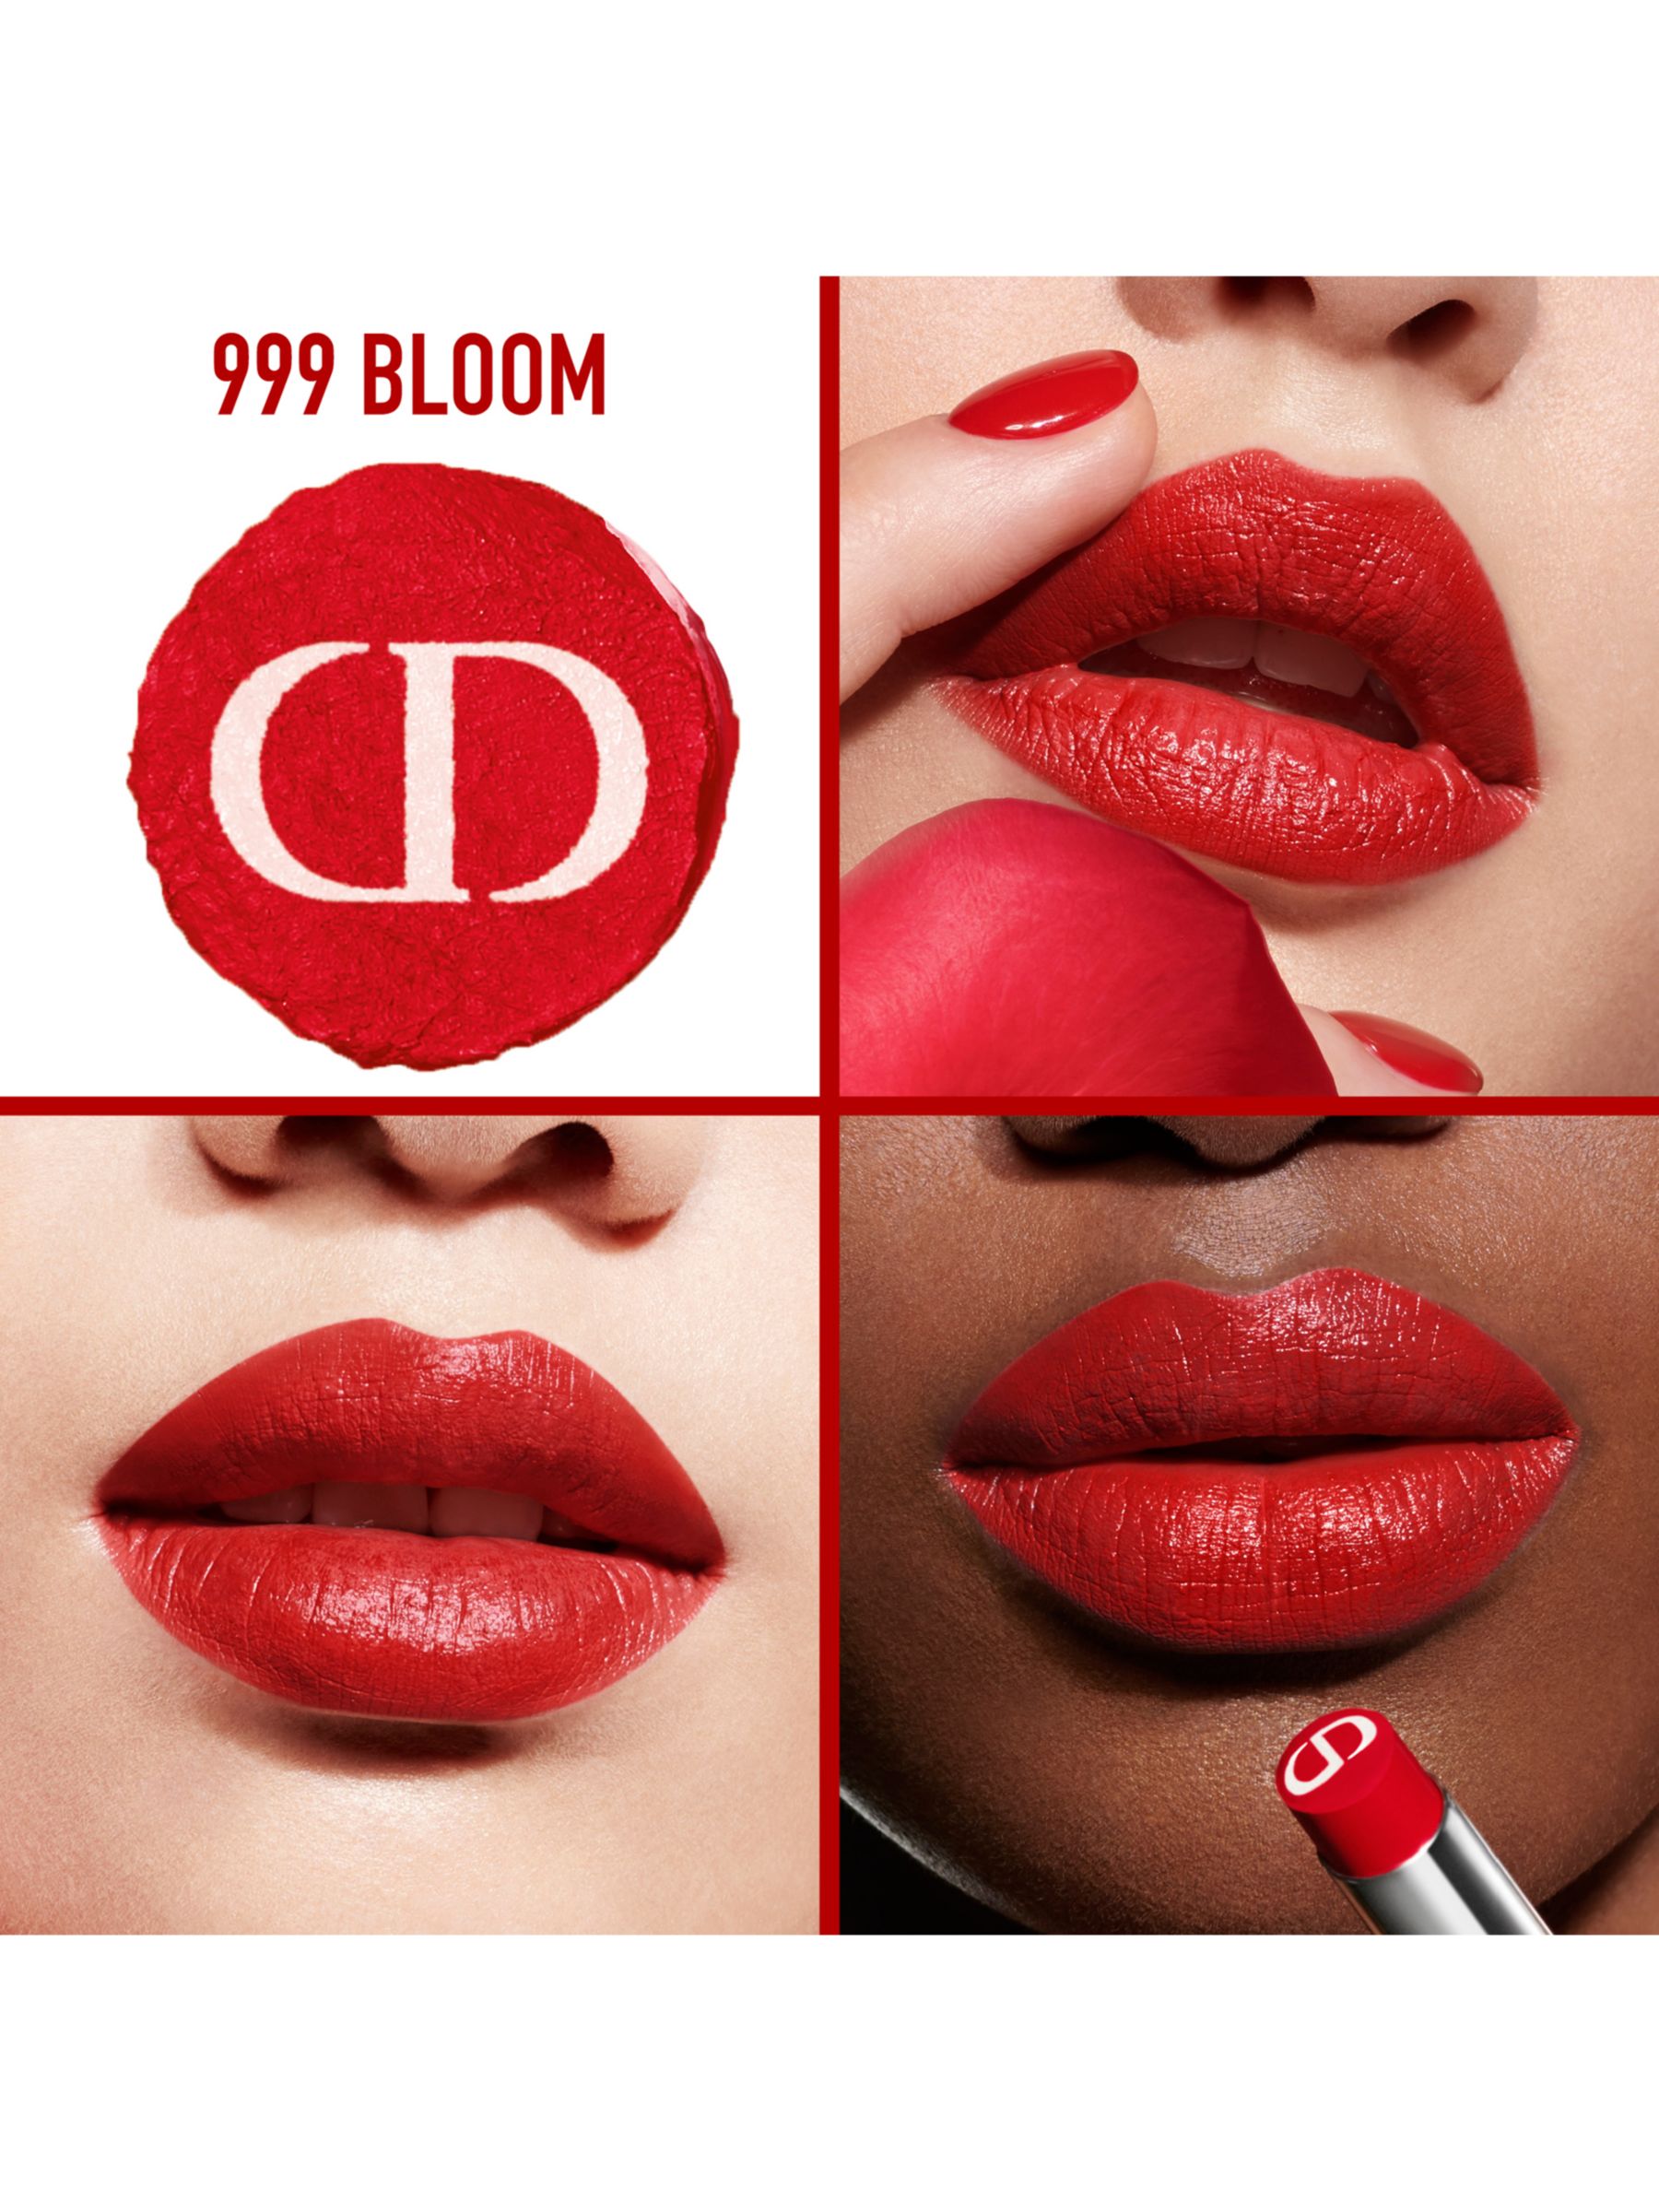 dior rouge dior lipstick in 999